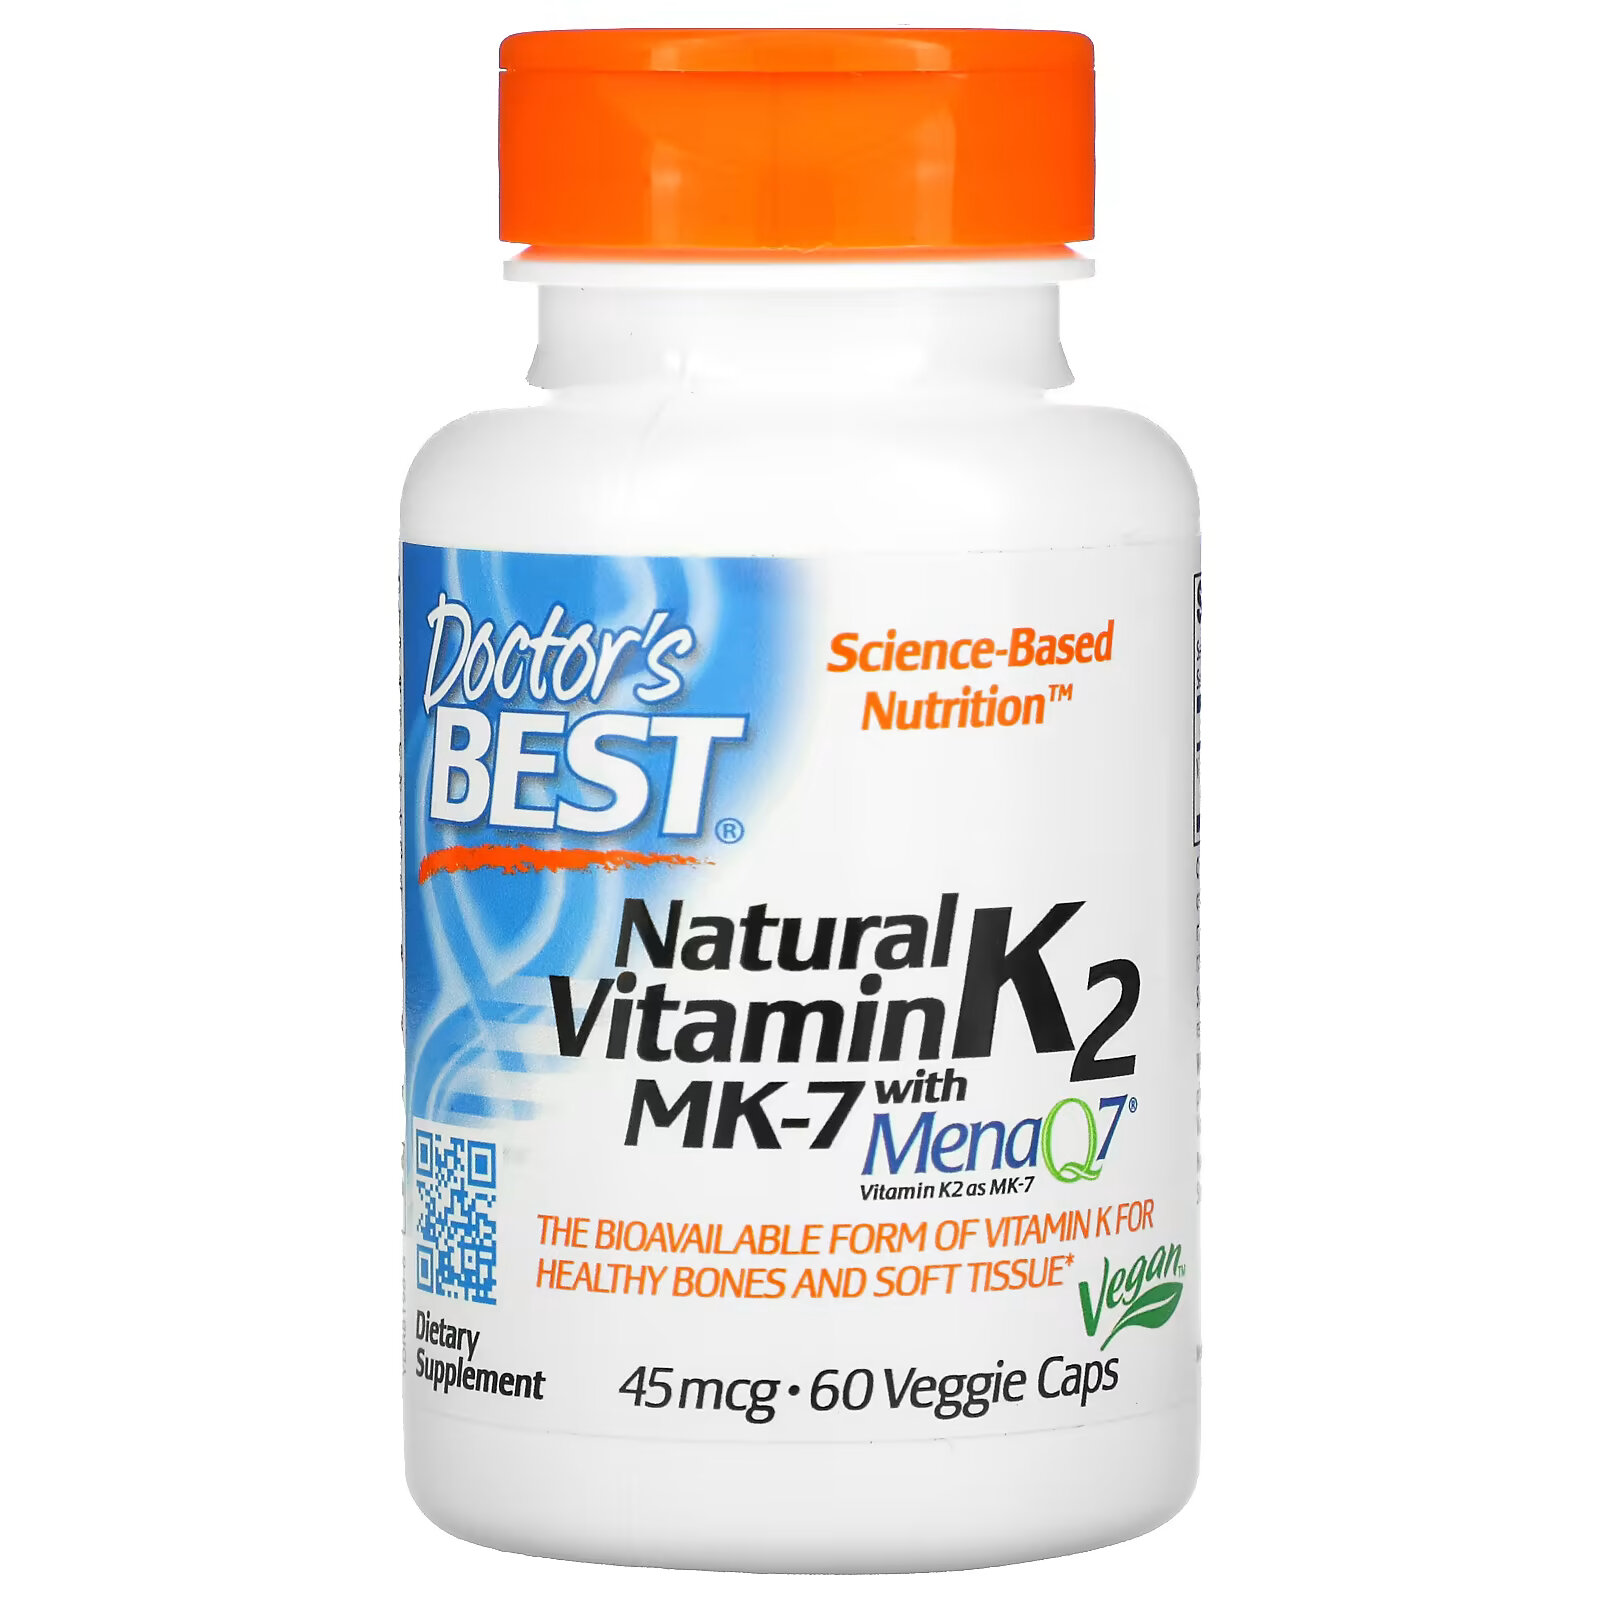 натуральный витамин k2 mk 7 с menaq7 doctor s best 100 мкг 60 растительных капсул Doctor's Best витамин K2 MK-7 с MenaQ7, 45 мкг, 60 вегетарианских капсул